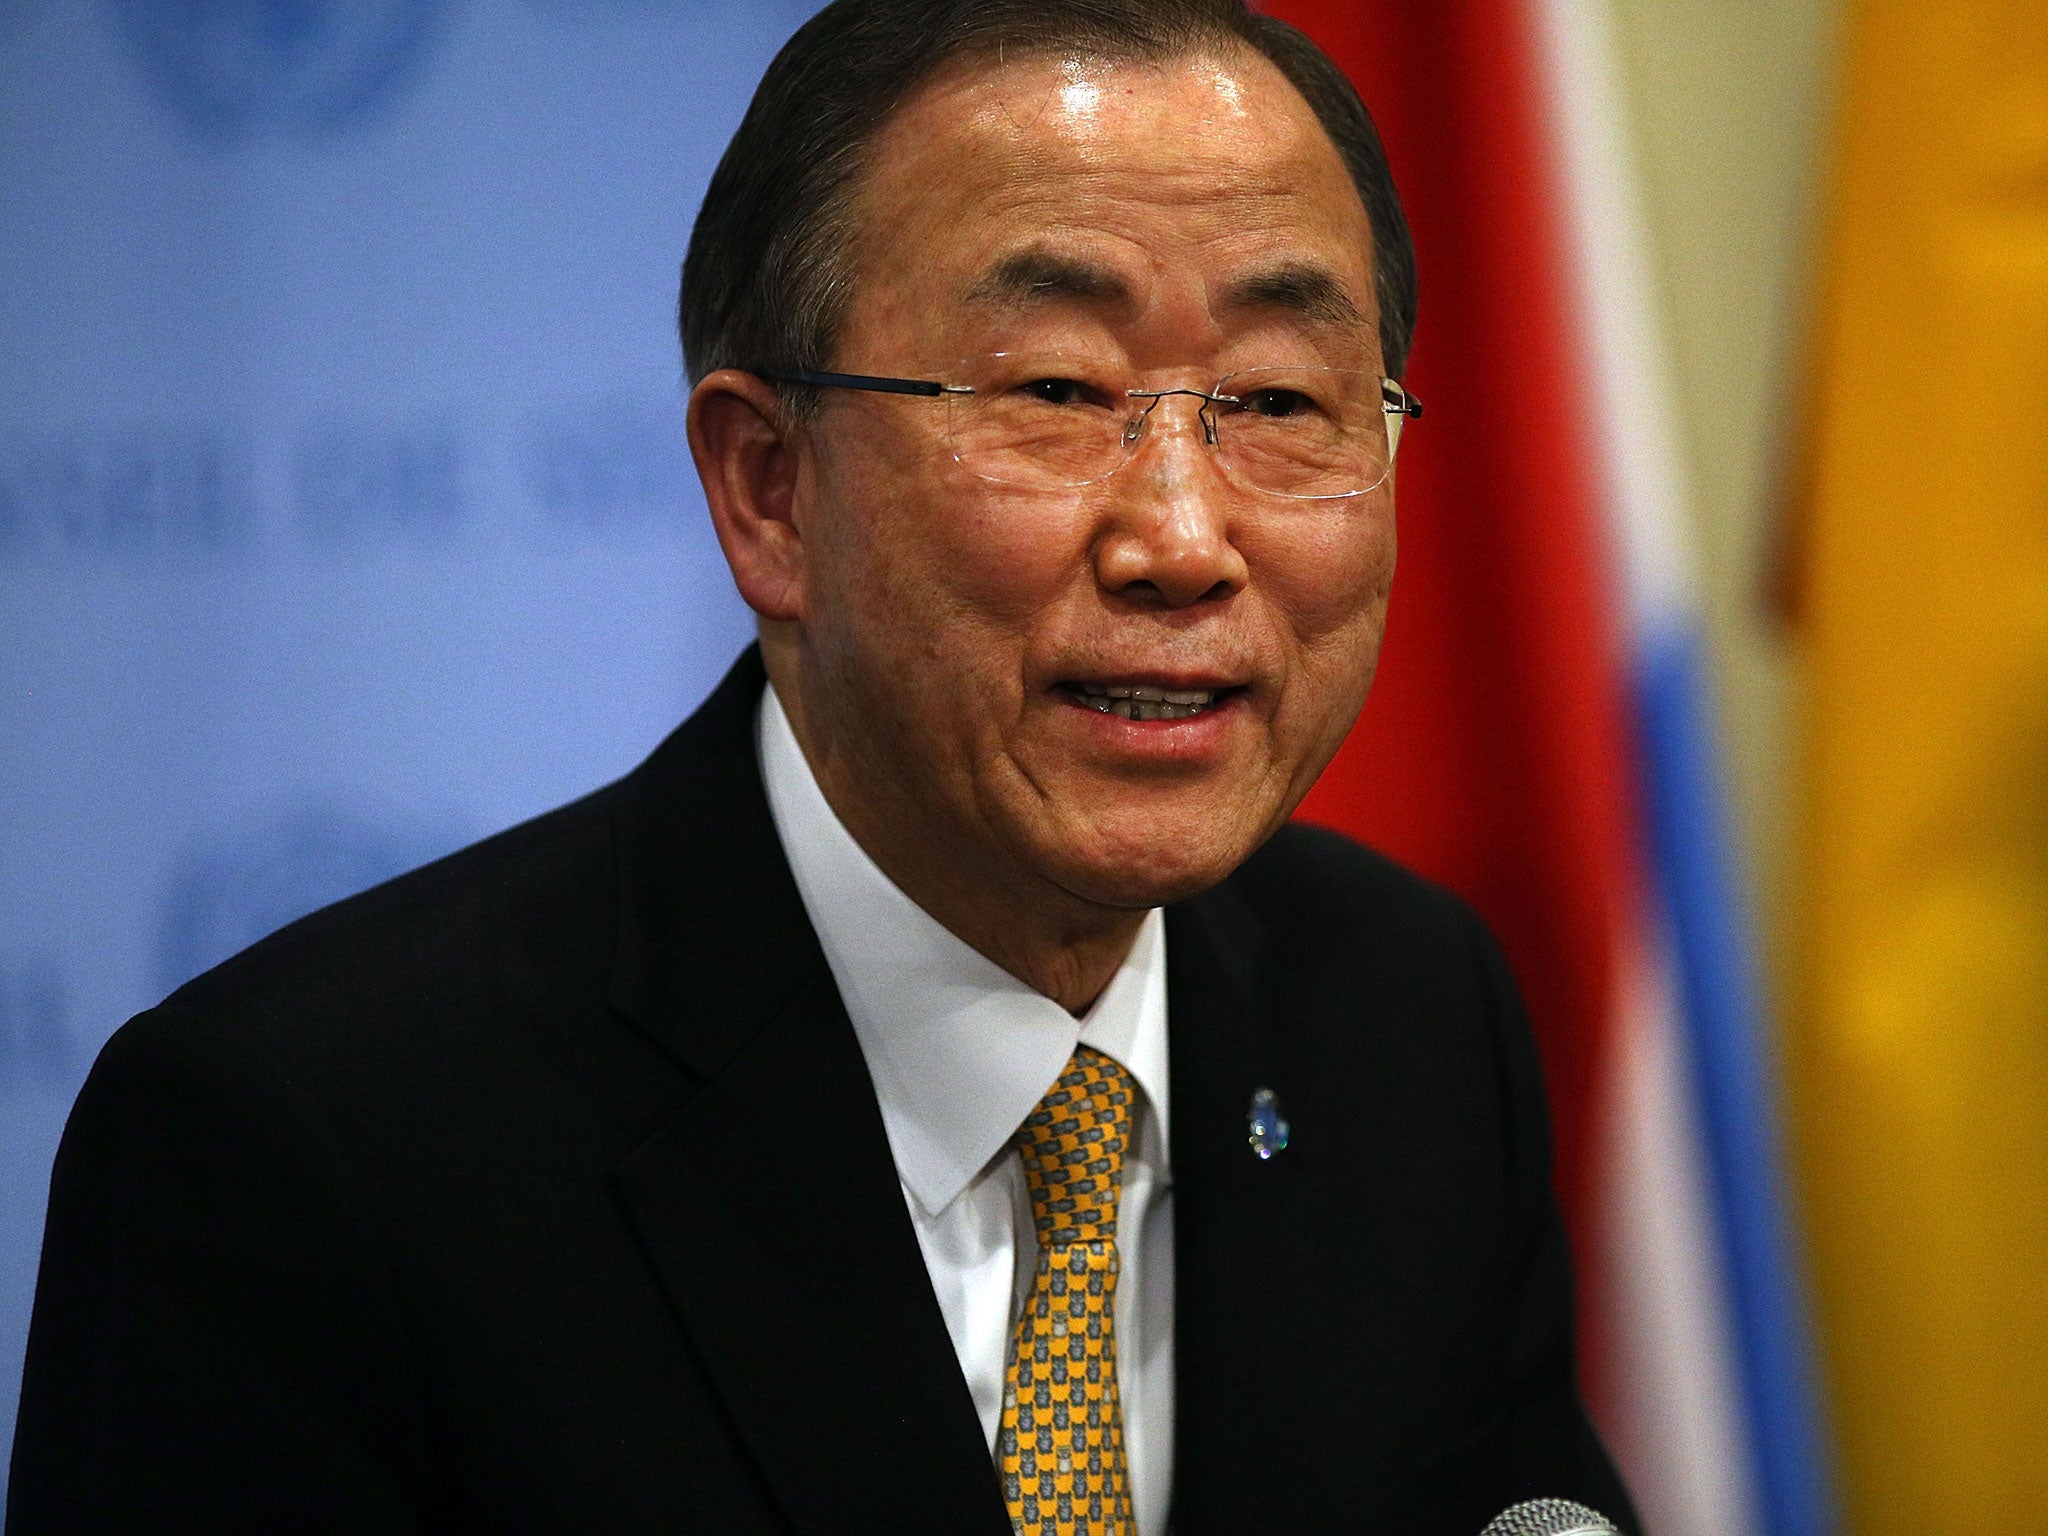 &#13;
Ban Ki-moon, the UN secretary general, is visiting today&#13;